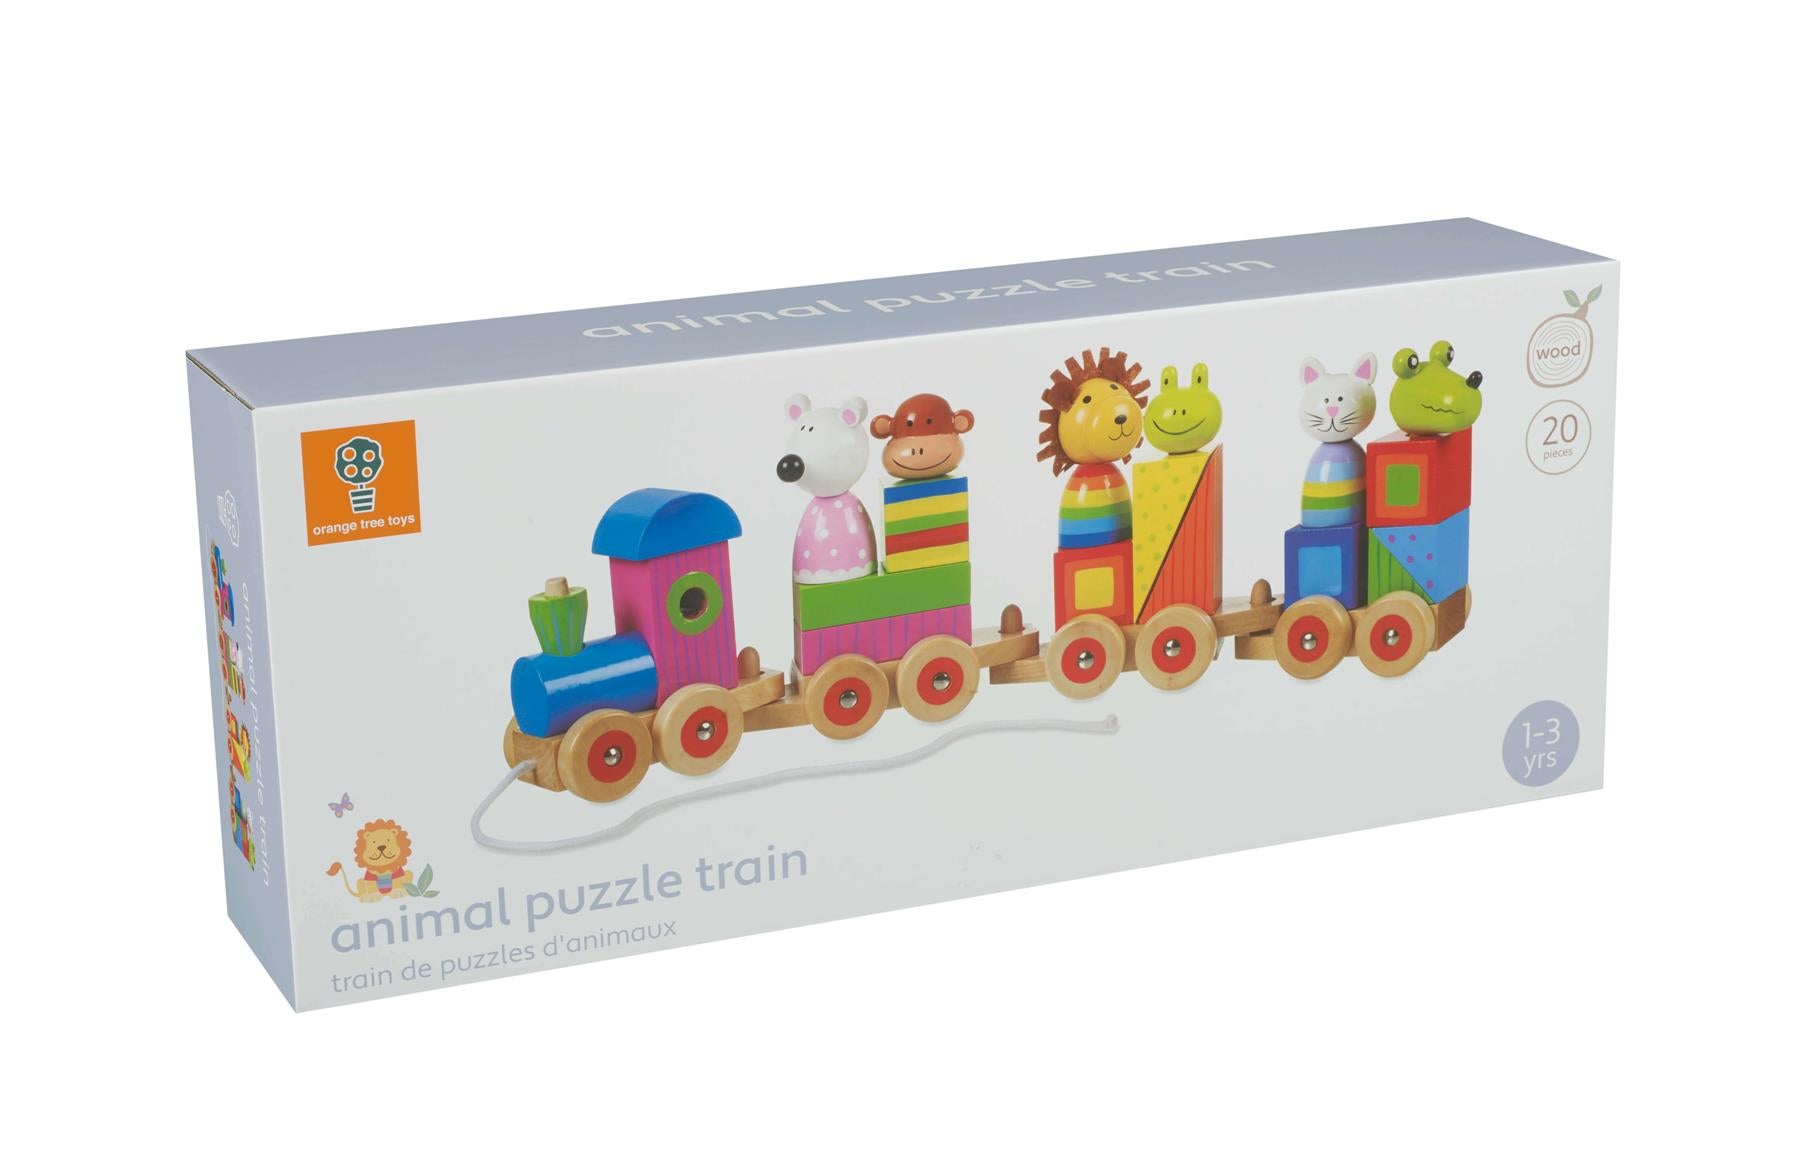 Orange Tree Toys Animal Puzzle Train